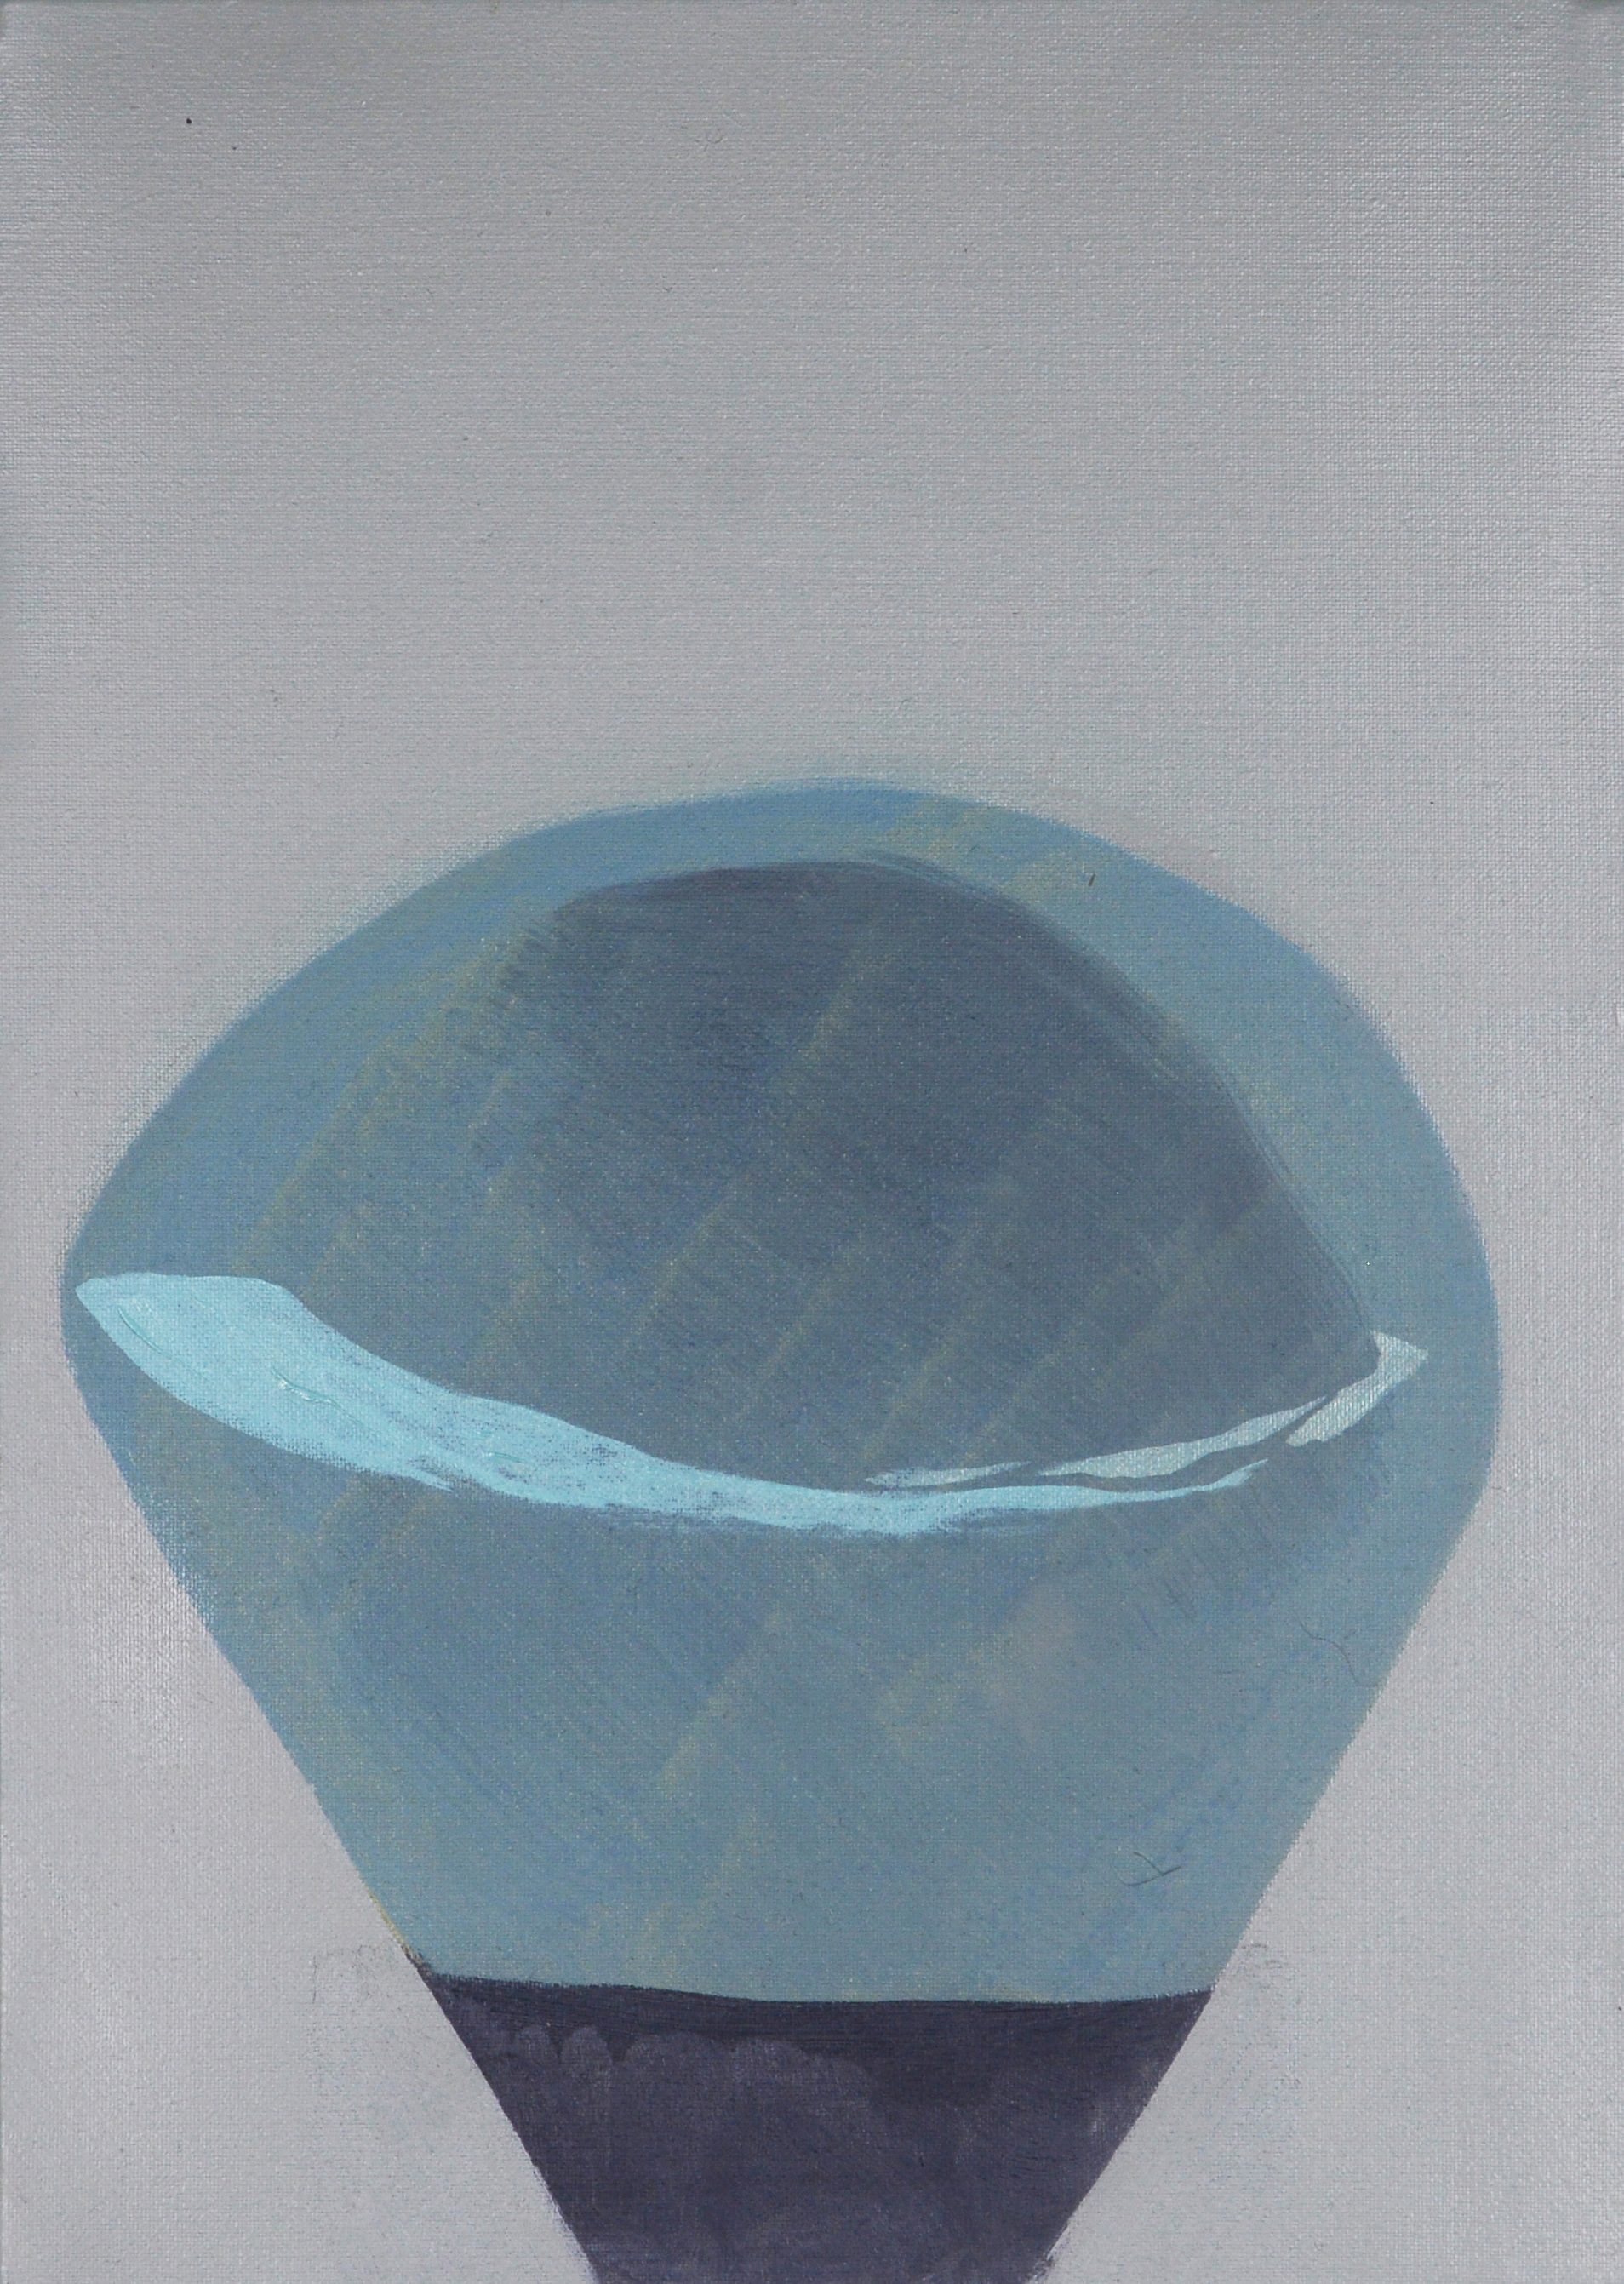 Pin Head, 2013, Oil on canvas, 35 x 25 cm